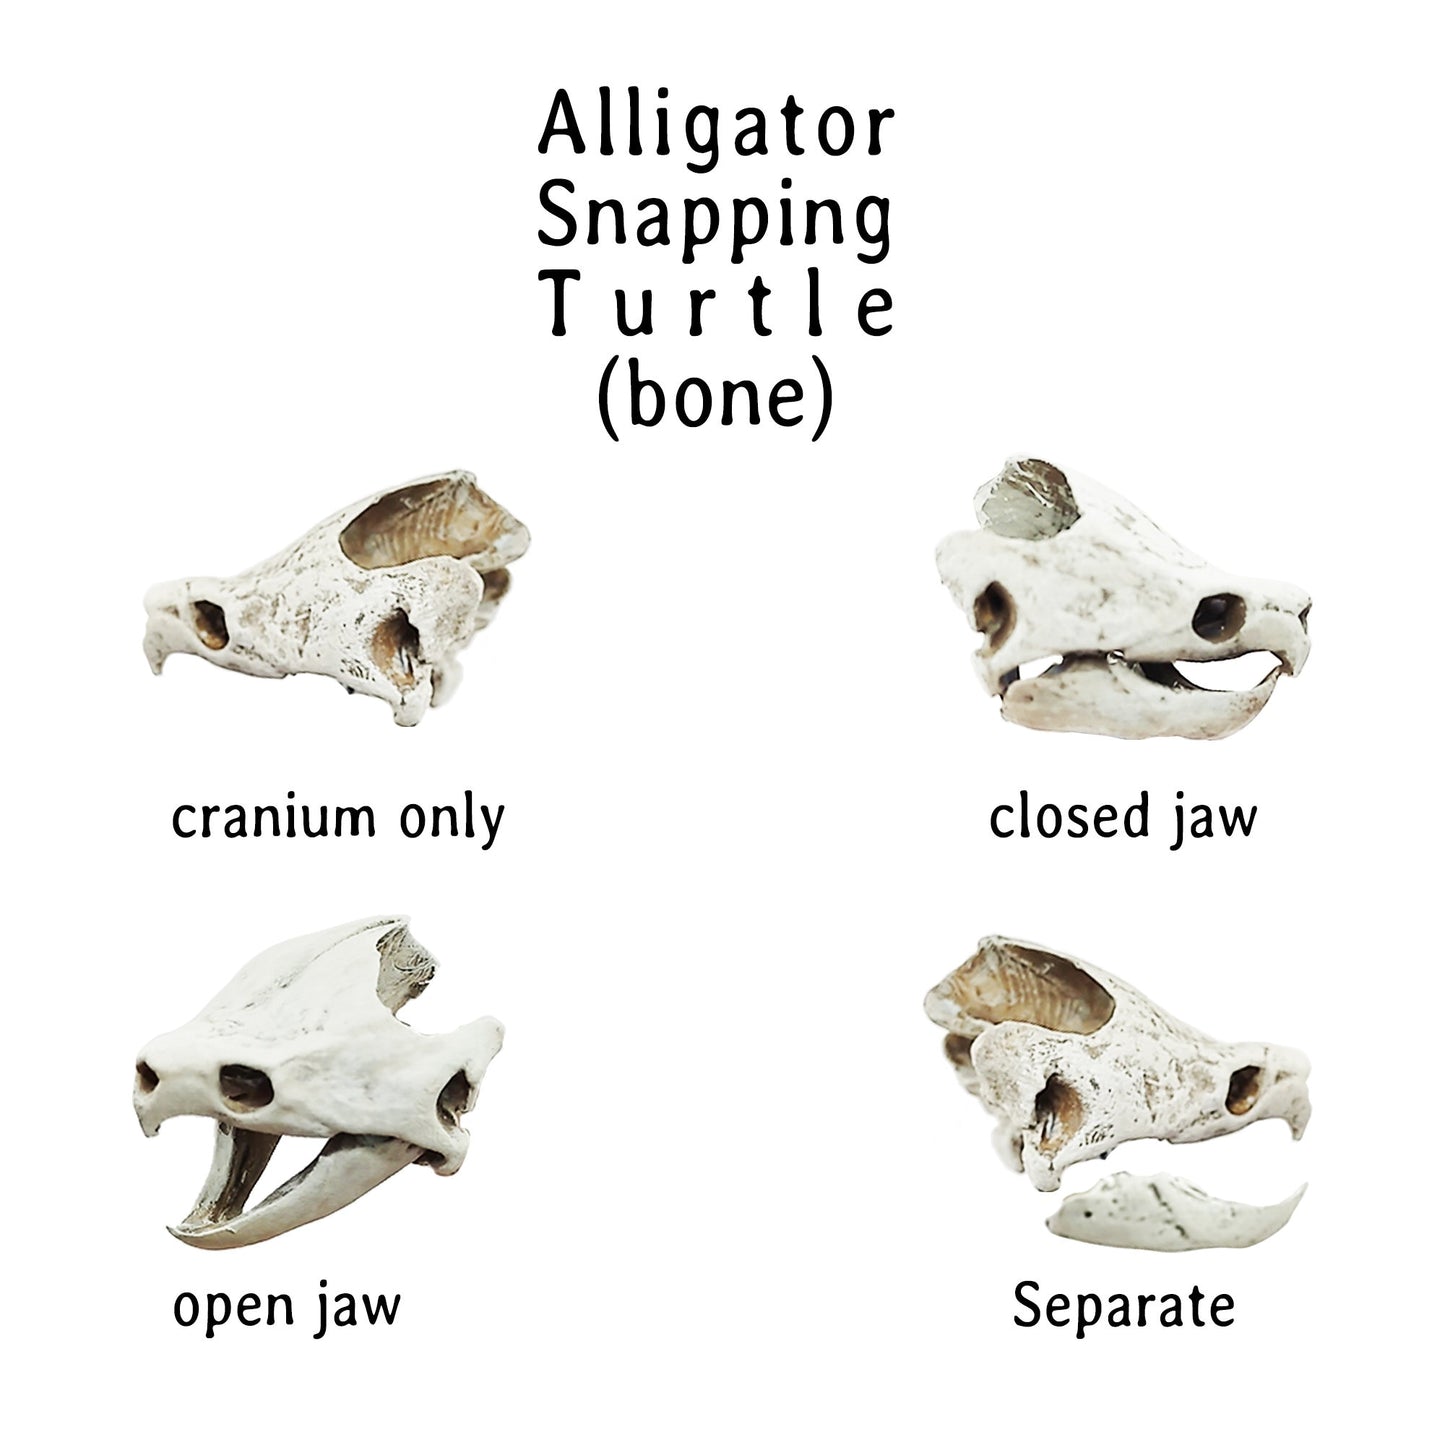 Alligator Snapping Turtle Skull - 1:12 Scale skull replica for diorama, dollhouse, curio cabinet, miniature animal skulls (Set of 2)